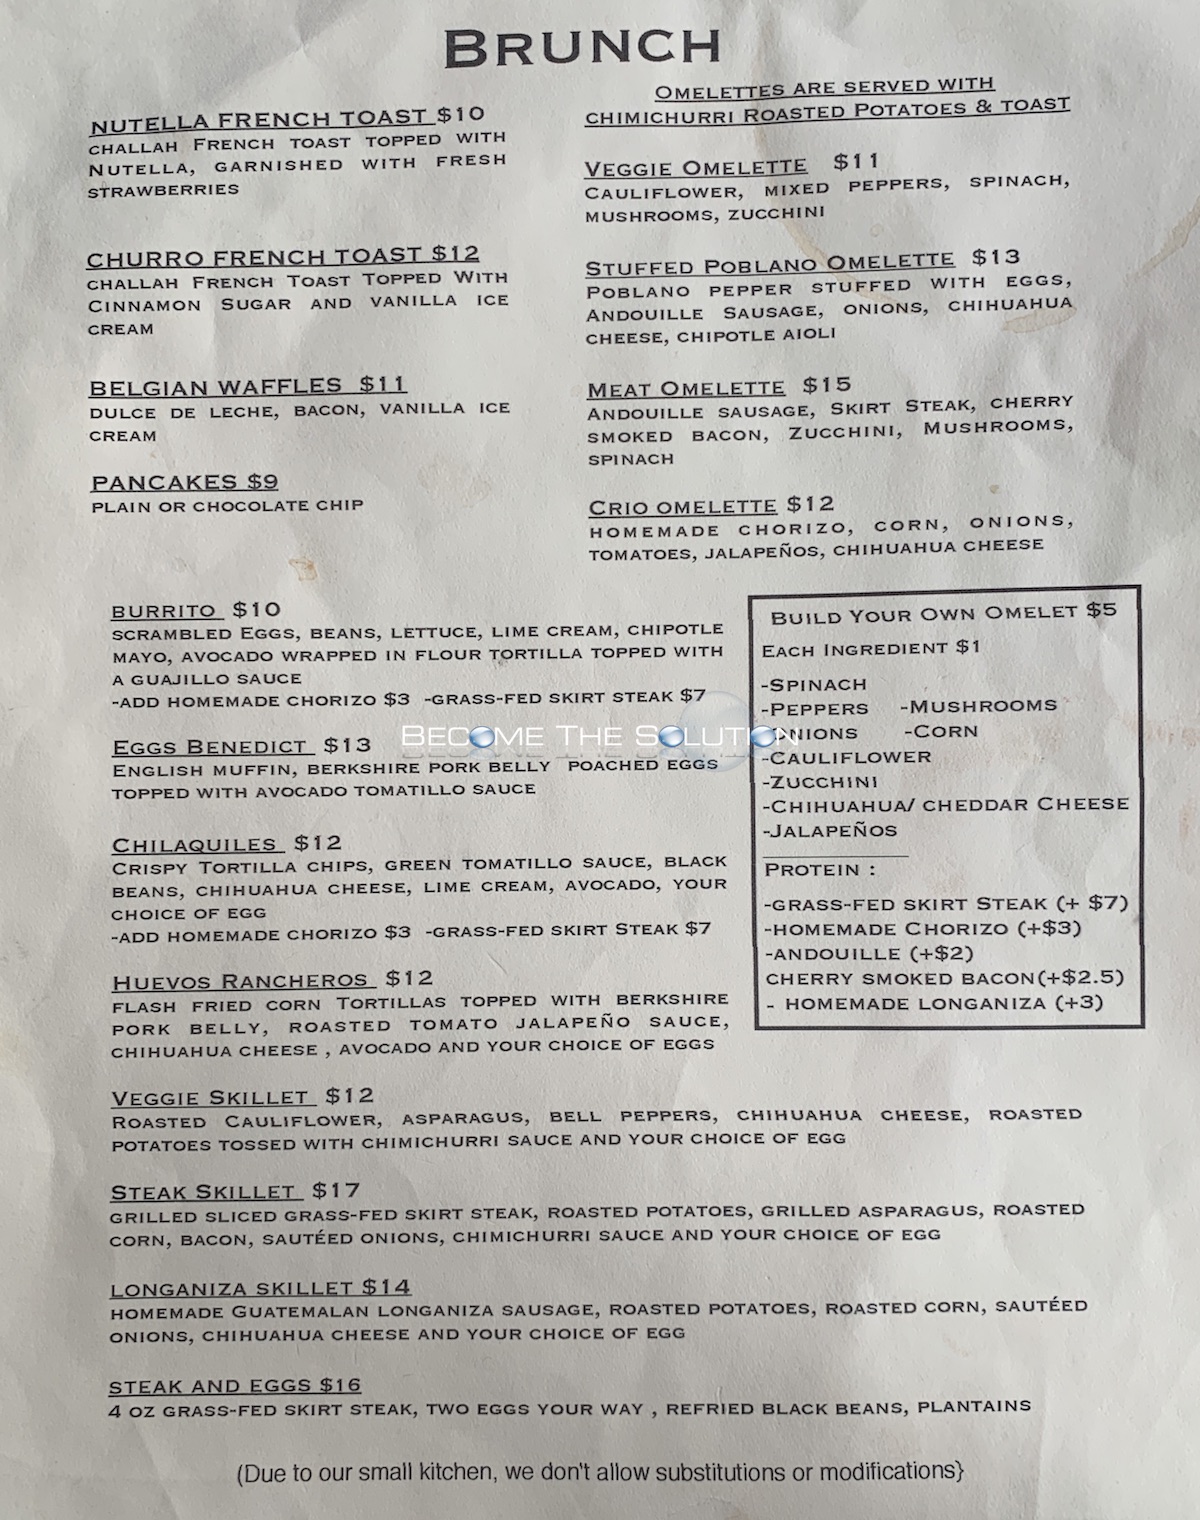 Crio brunch chicago menu 1